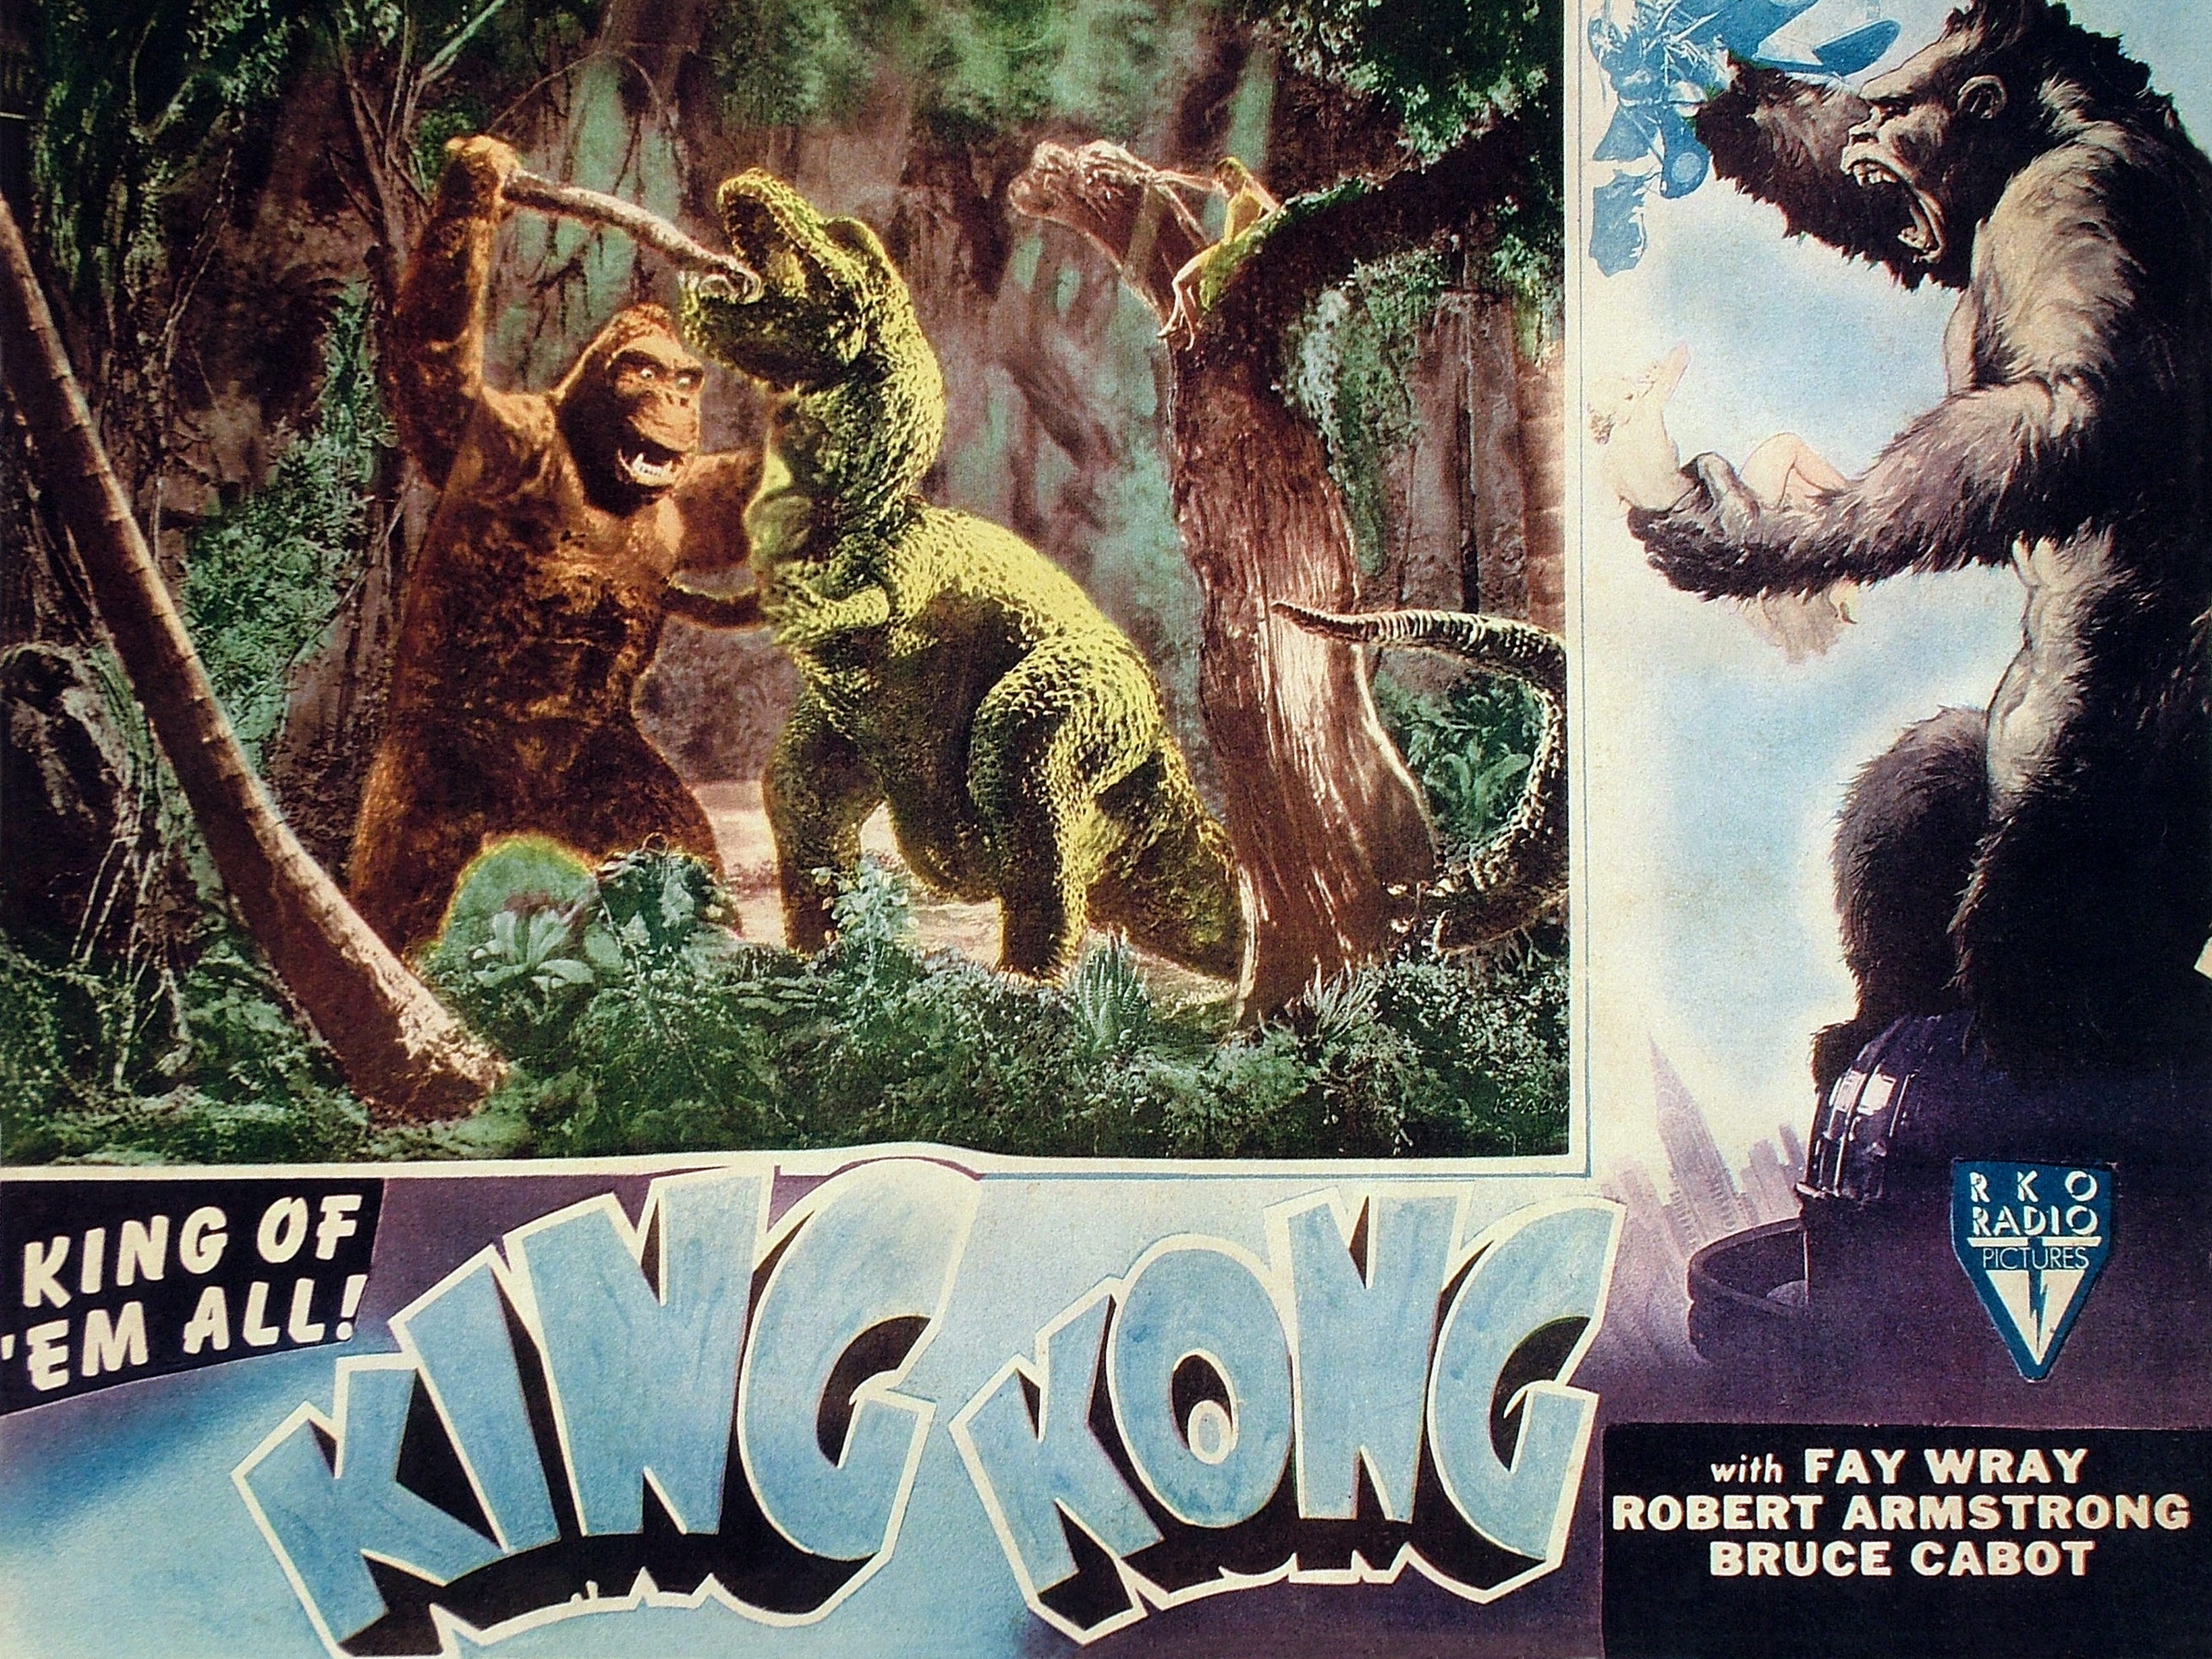 579278 descargar imagen películas, rey kong (1933), rey kong: fondos de pantalla y protectores de pantalla gratis